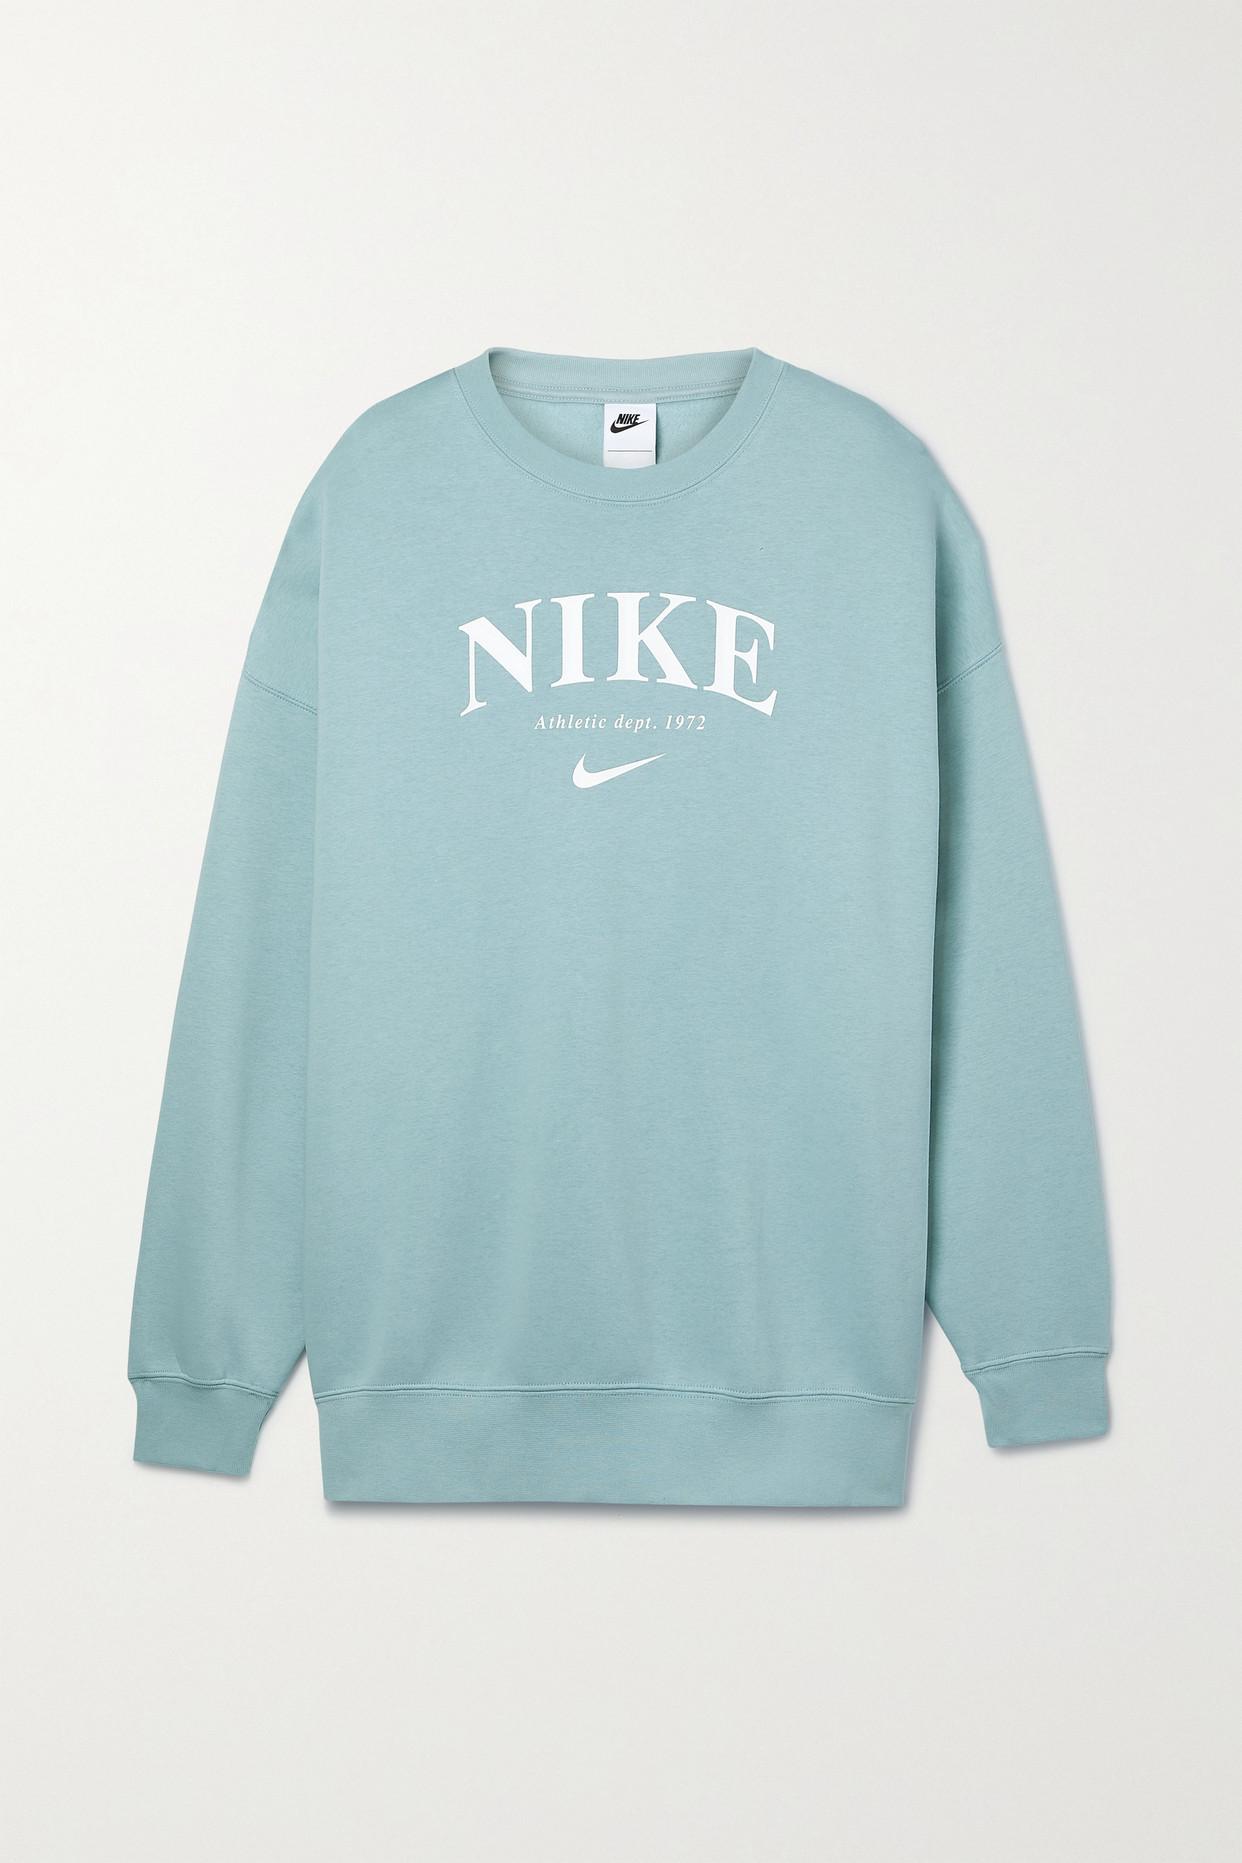 Nike Sportswear Essentials Oversized Printed Cotton-blend Jersey ...